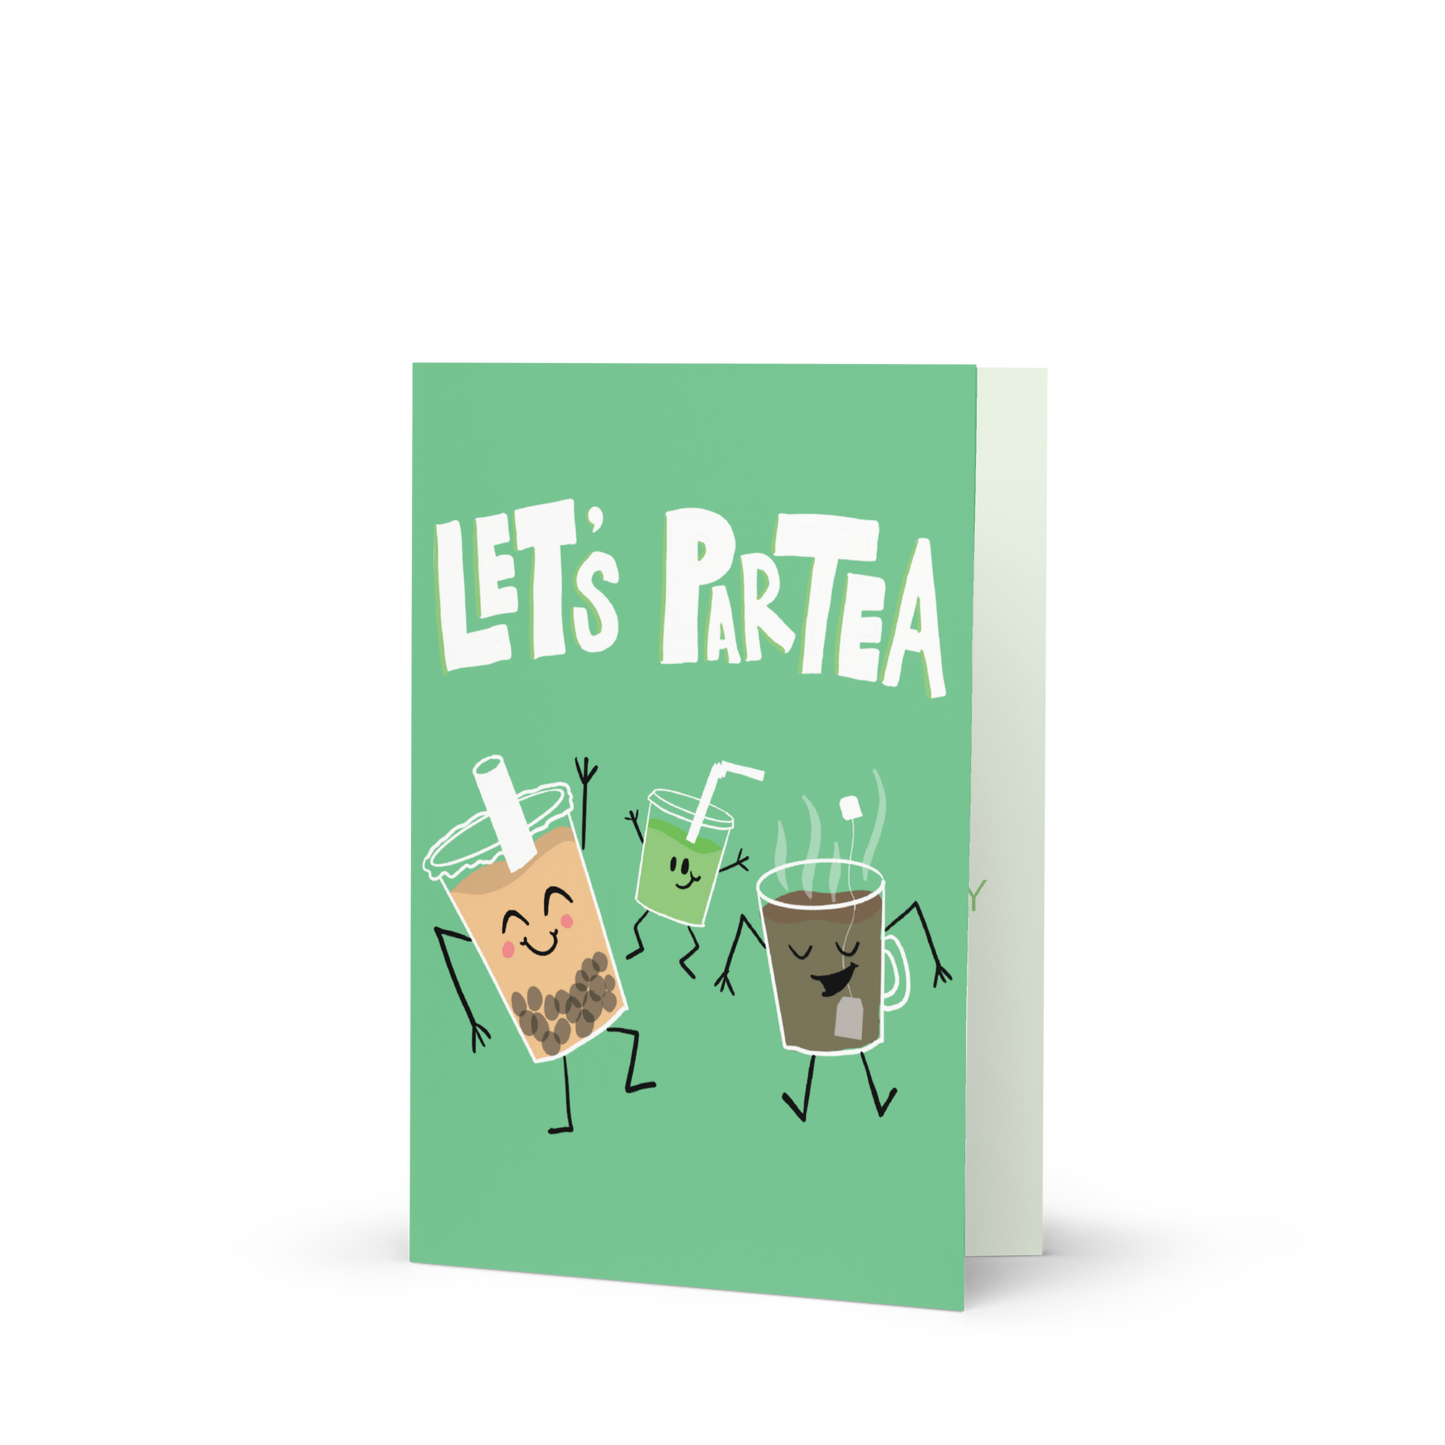 "Let's ParTEA!" Birthday Card / Matcha Birthday Card / Funny Birthday Card